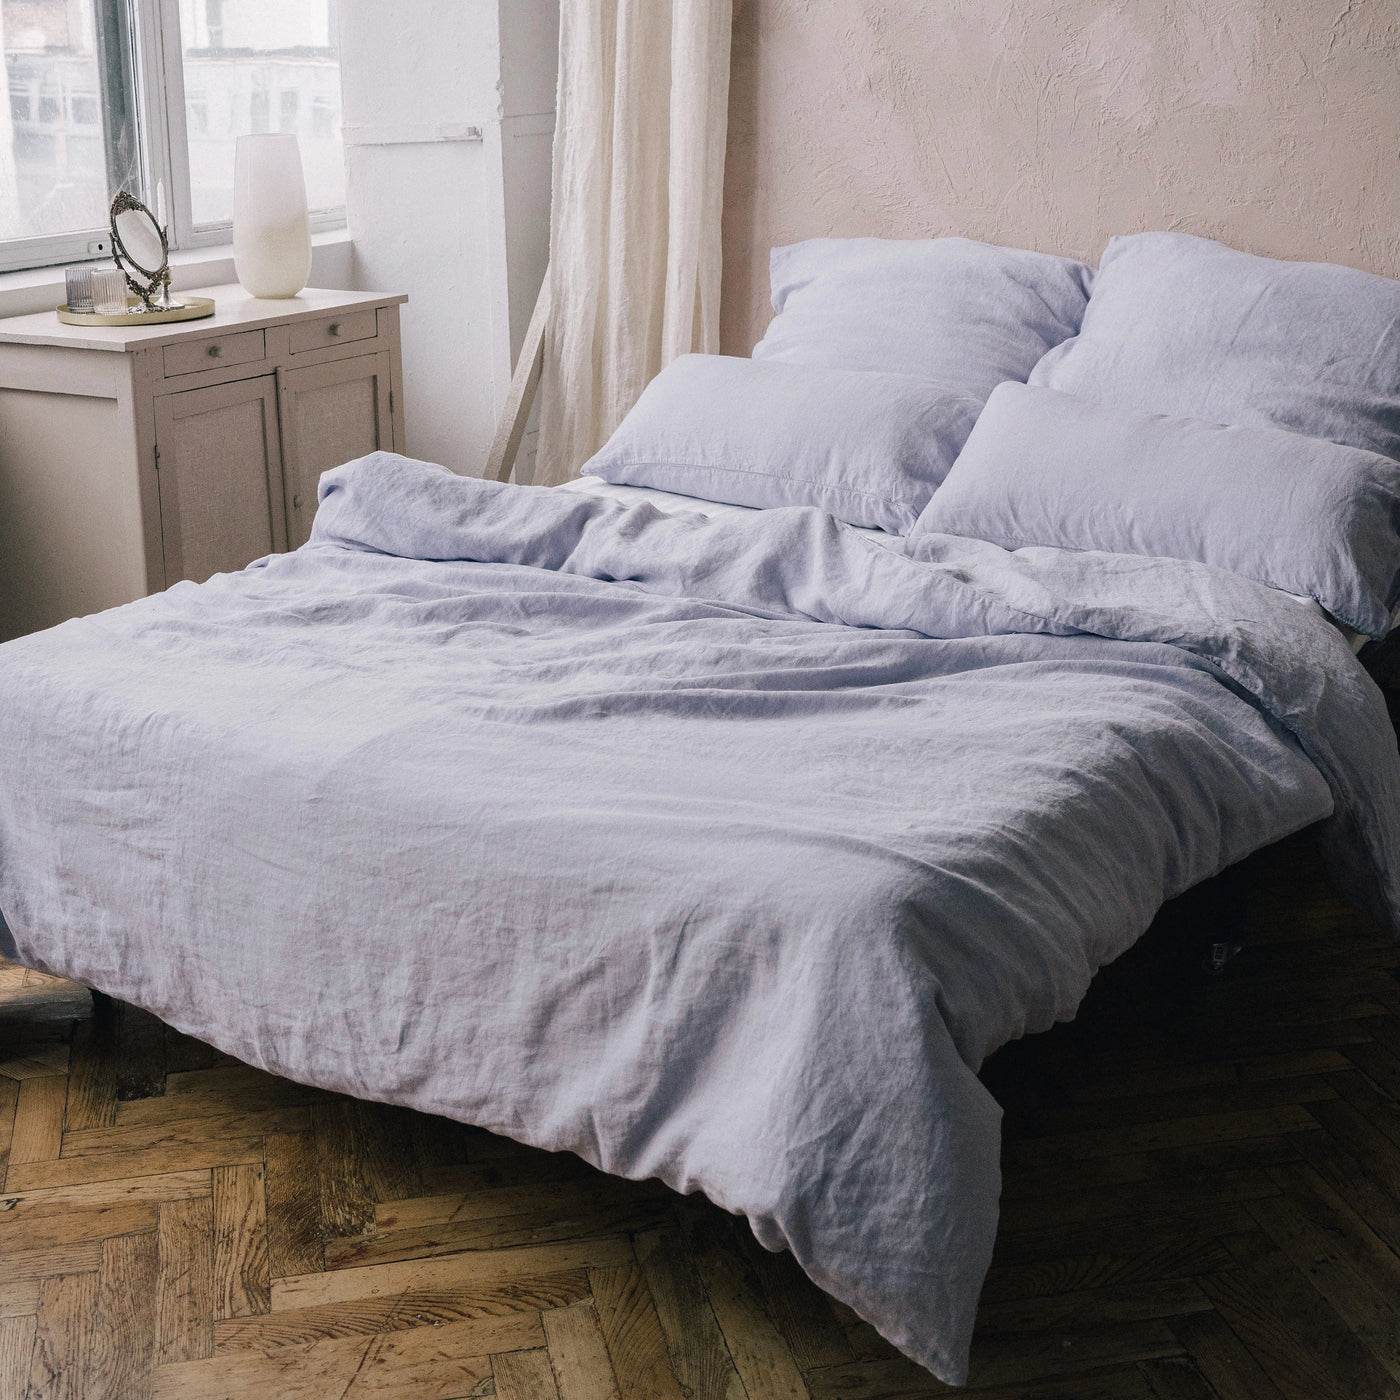 Buy now Eco-Friendly Linen Duvet Cover in Lavender 2